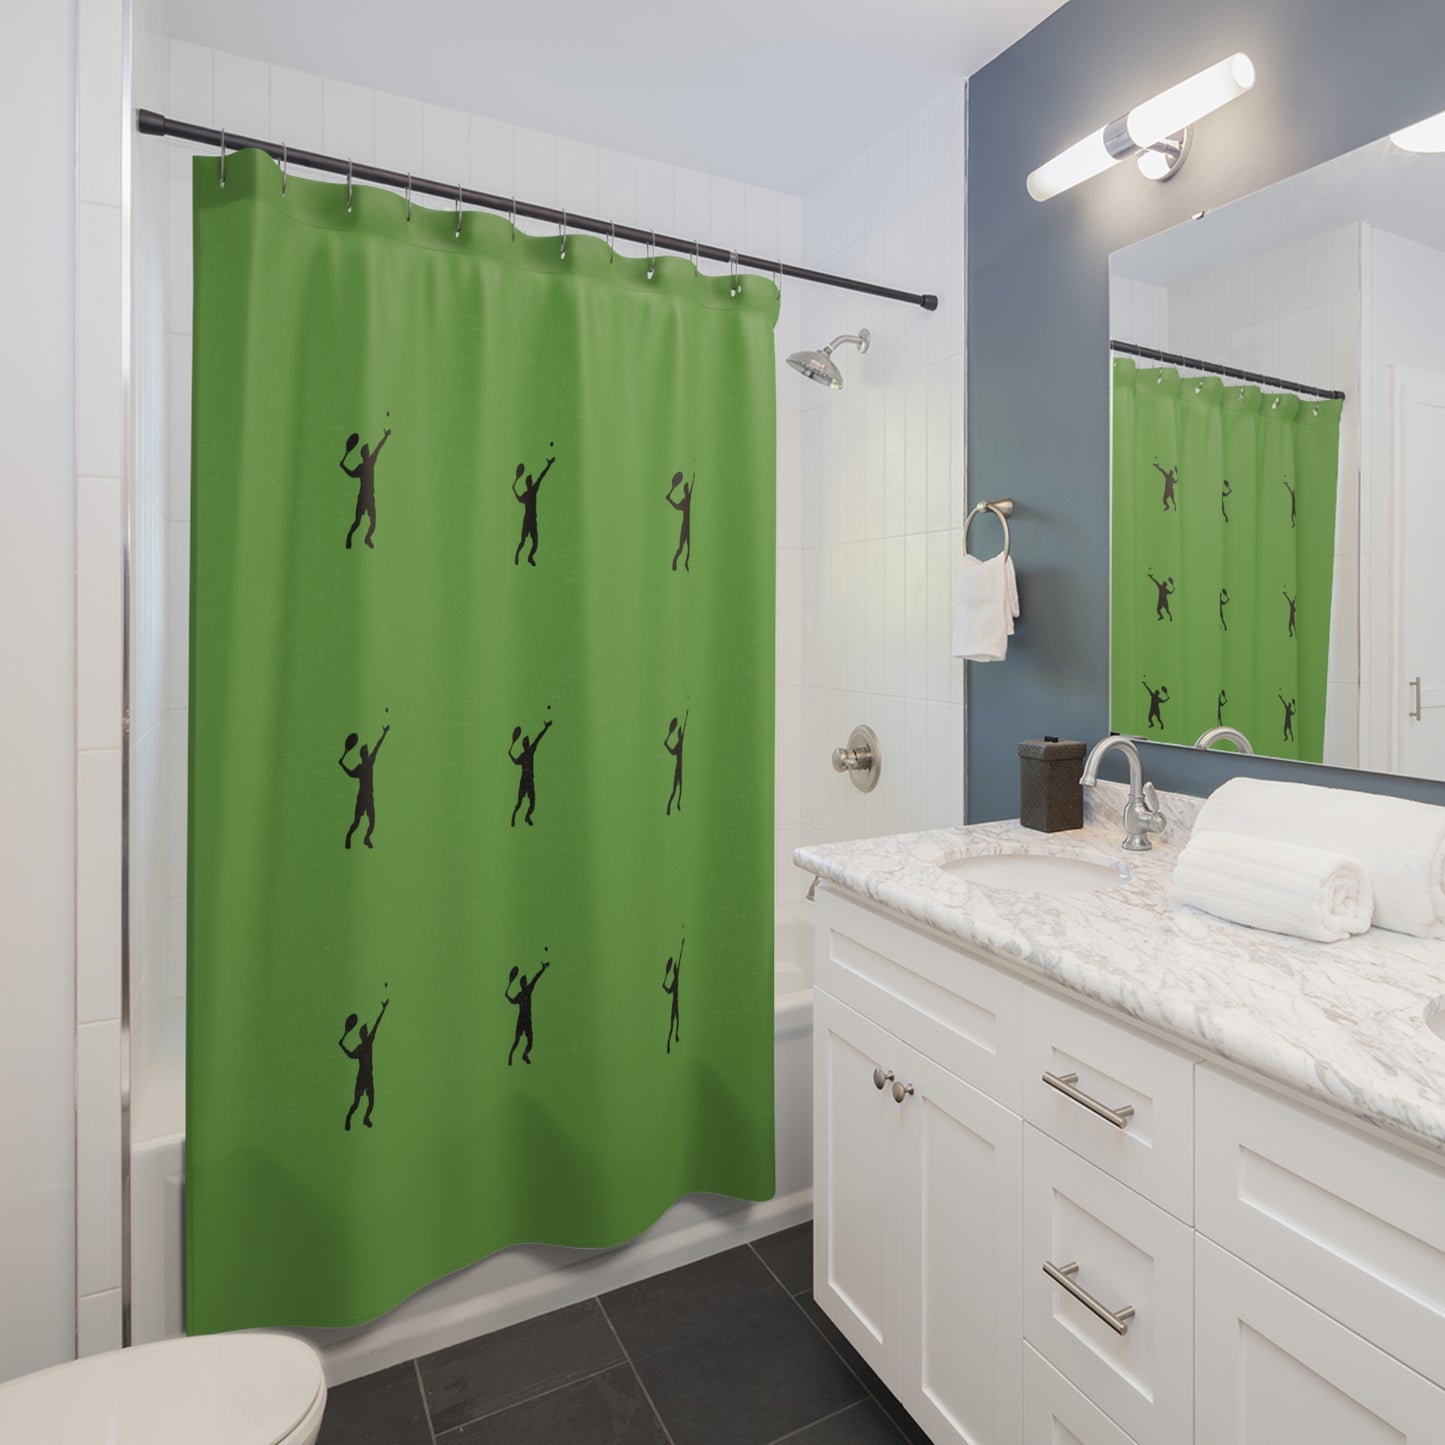 Shower Curtains: #2 Tennis Green